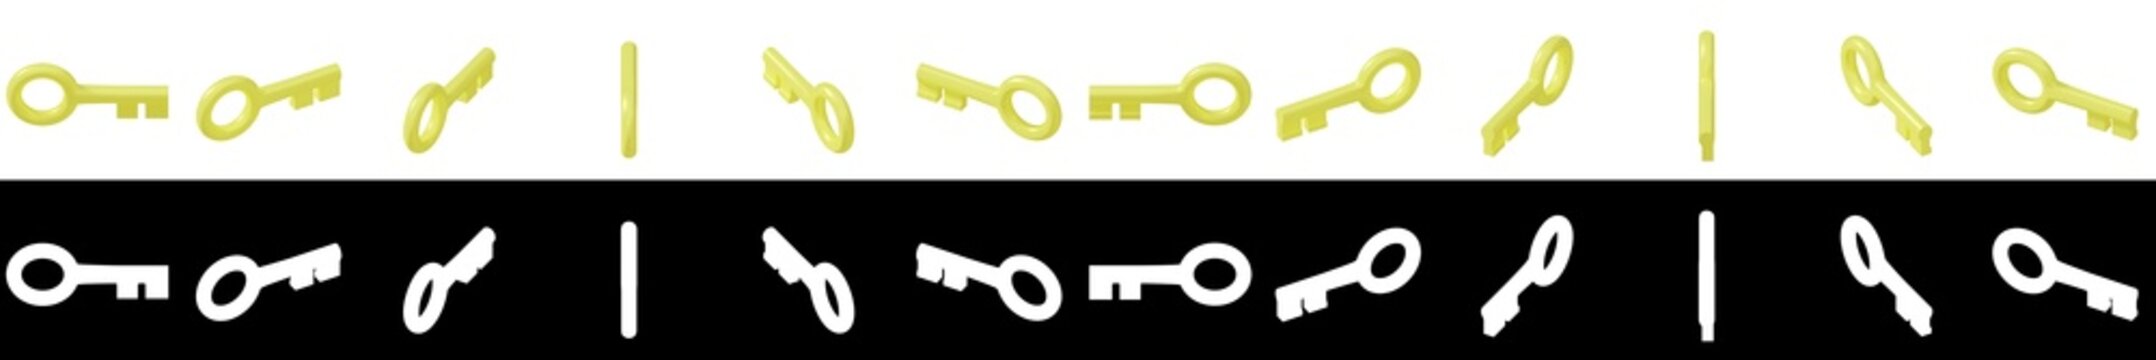 3D rendering illustration sprites of a stylized key